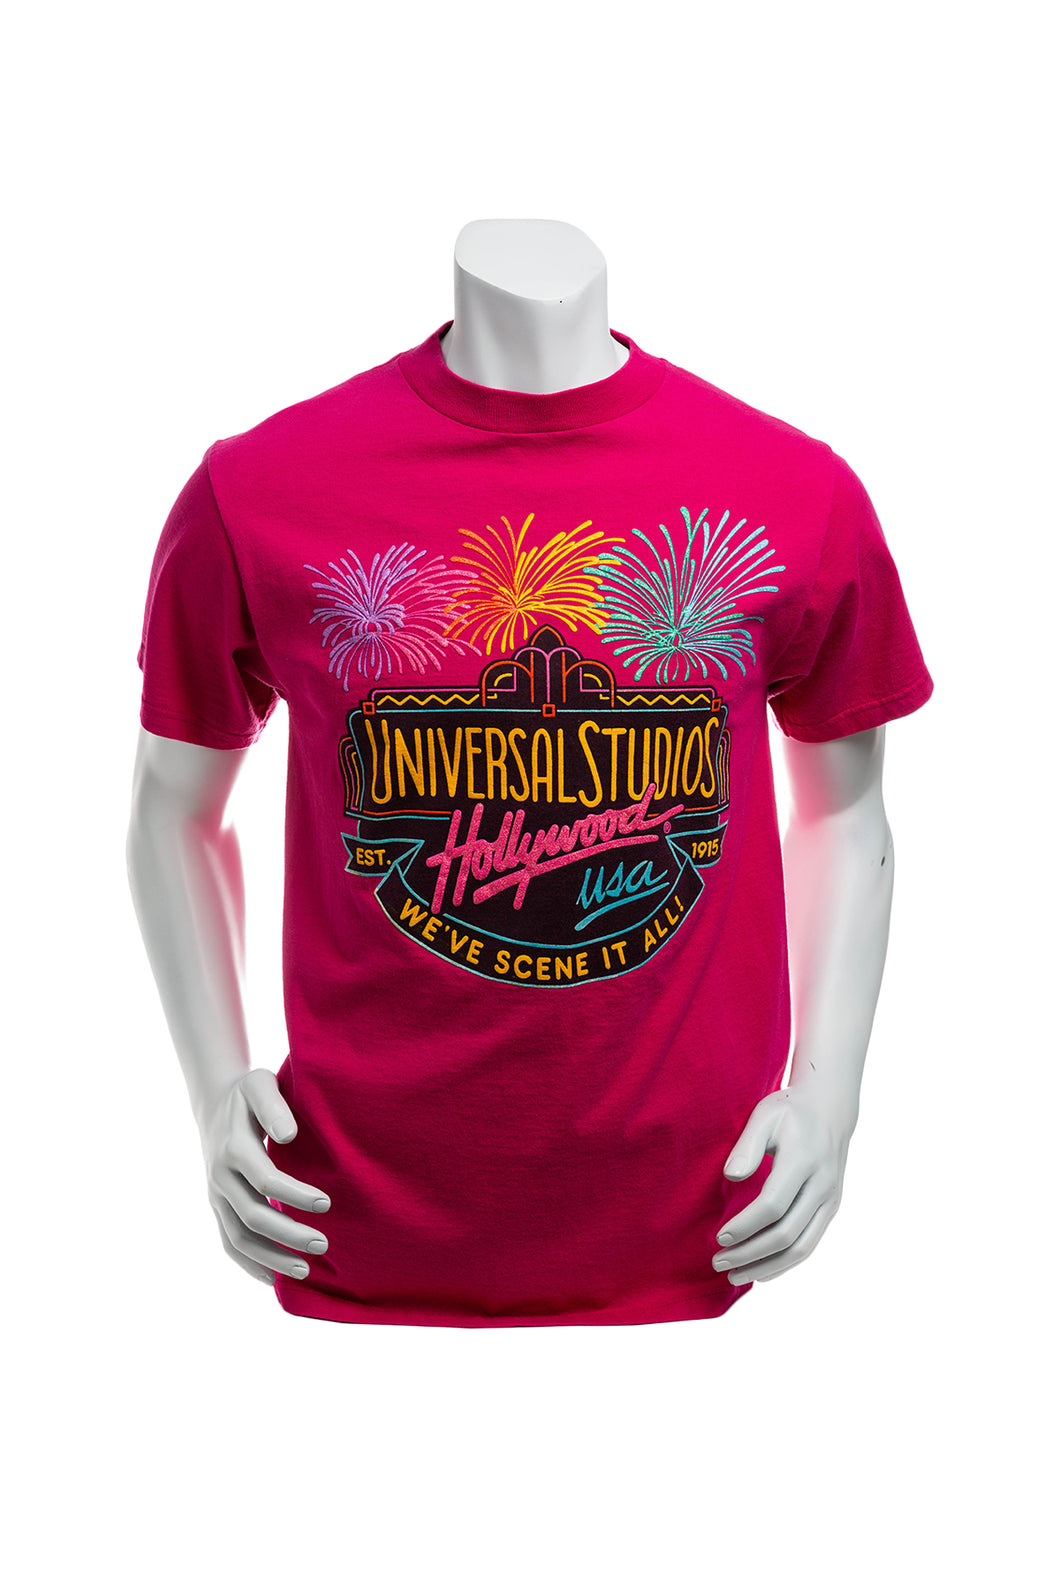 Vintage 90's Universal Studios Hollywood Puffy Paint T-Shirt Men's Medium